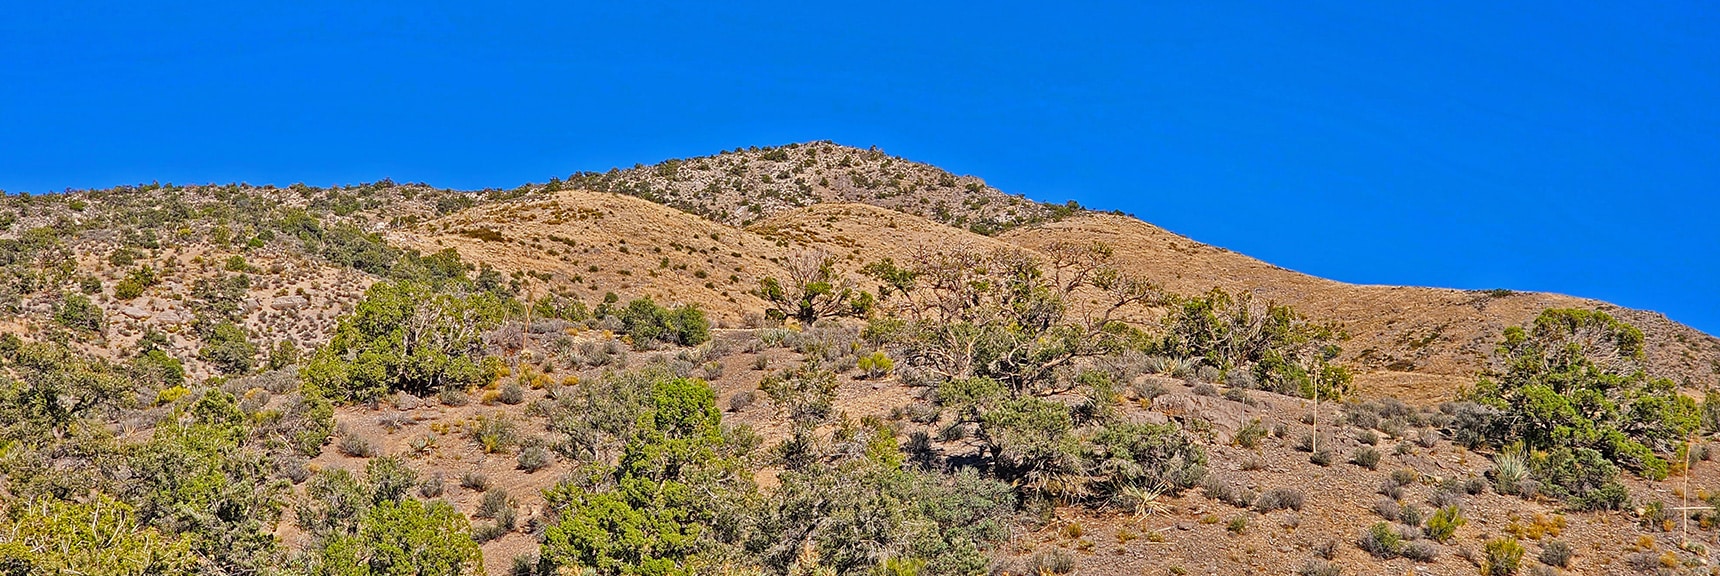 Height in Center is Southern Point of Rainbow Mountains Upper Crest Ridgeline. | Hollow Rock Peak | Rainbow Mountain Wilderness, Nevada